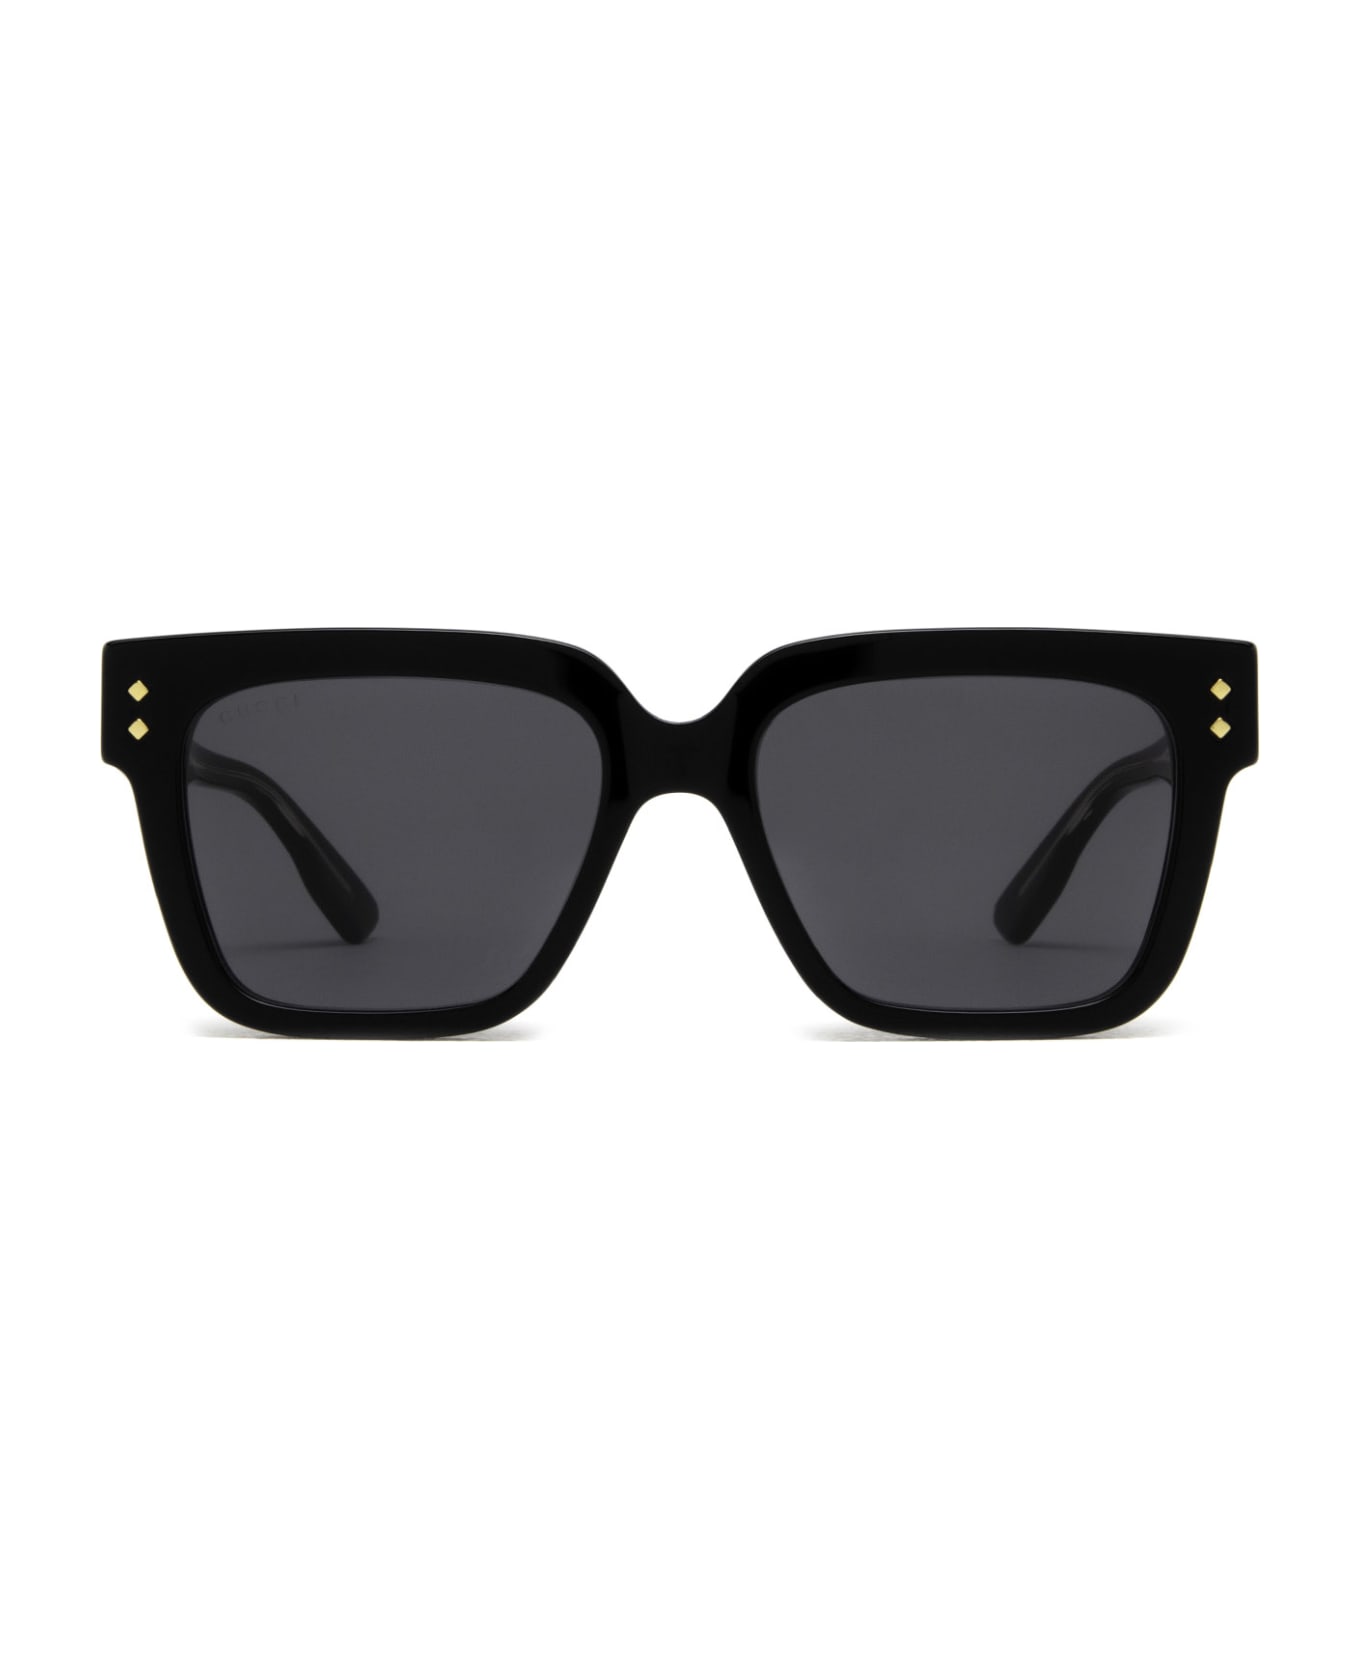 Gucci Eyewear Gg1084s Black Sunglasses - Black